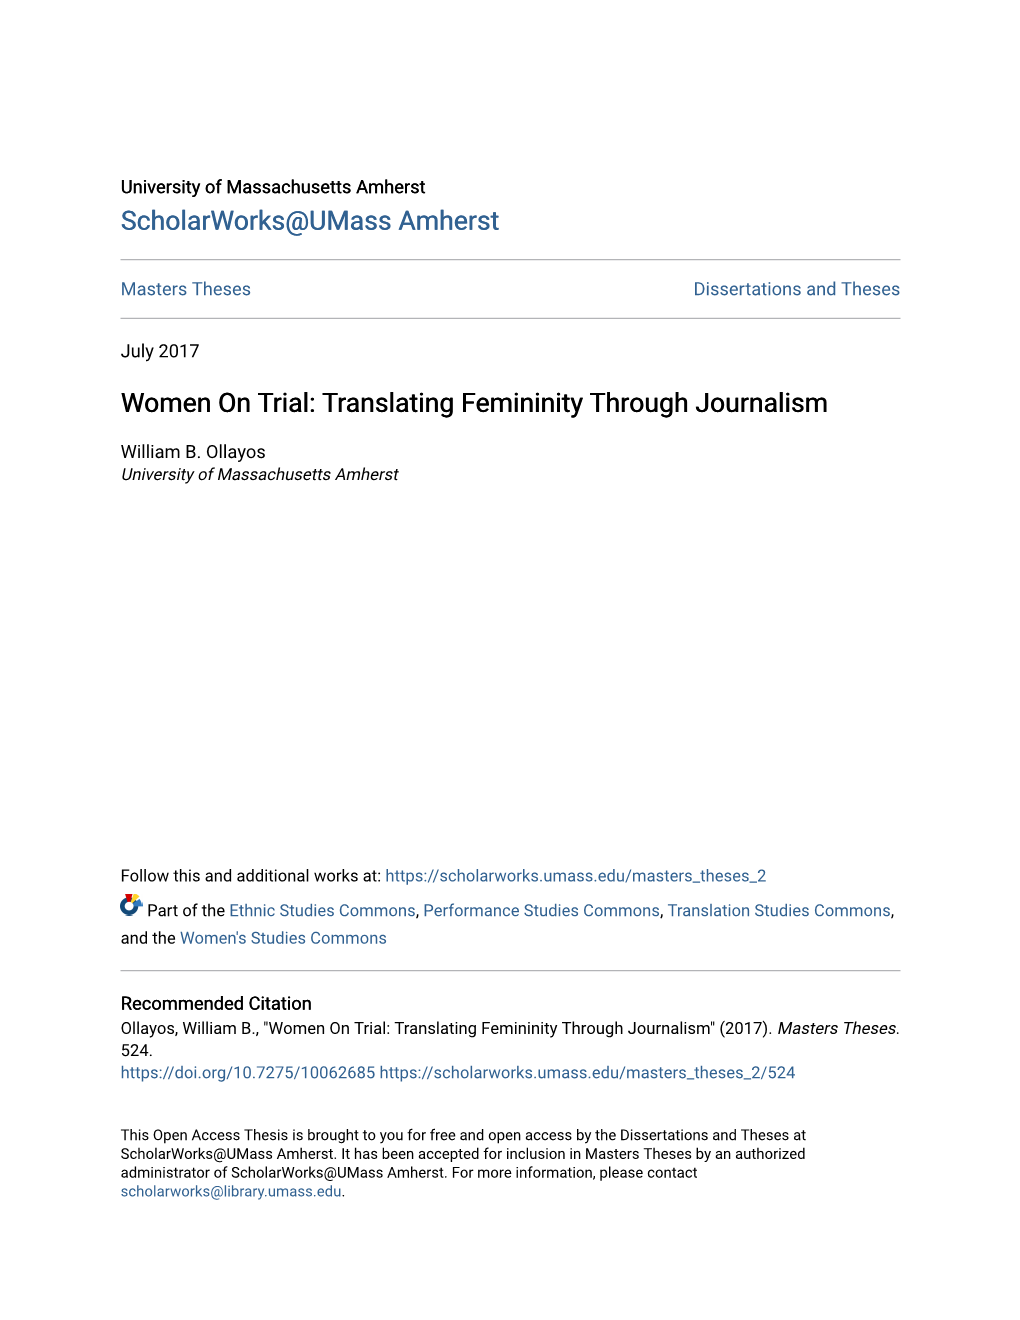 Translating Femininity Through Journalism